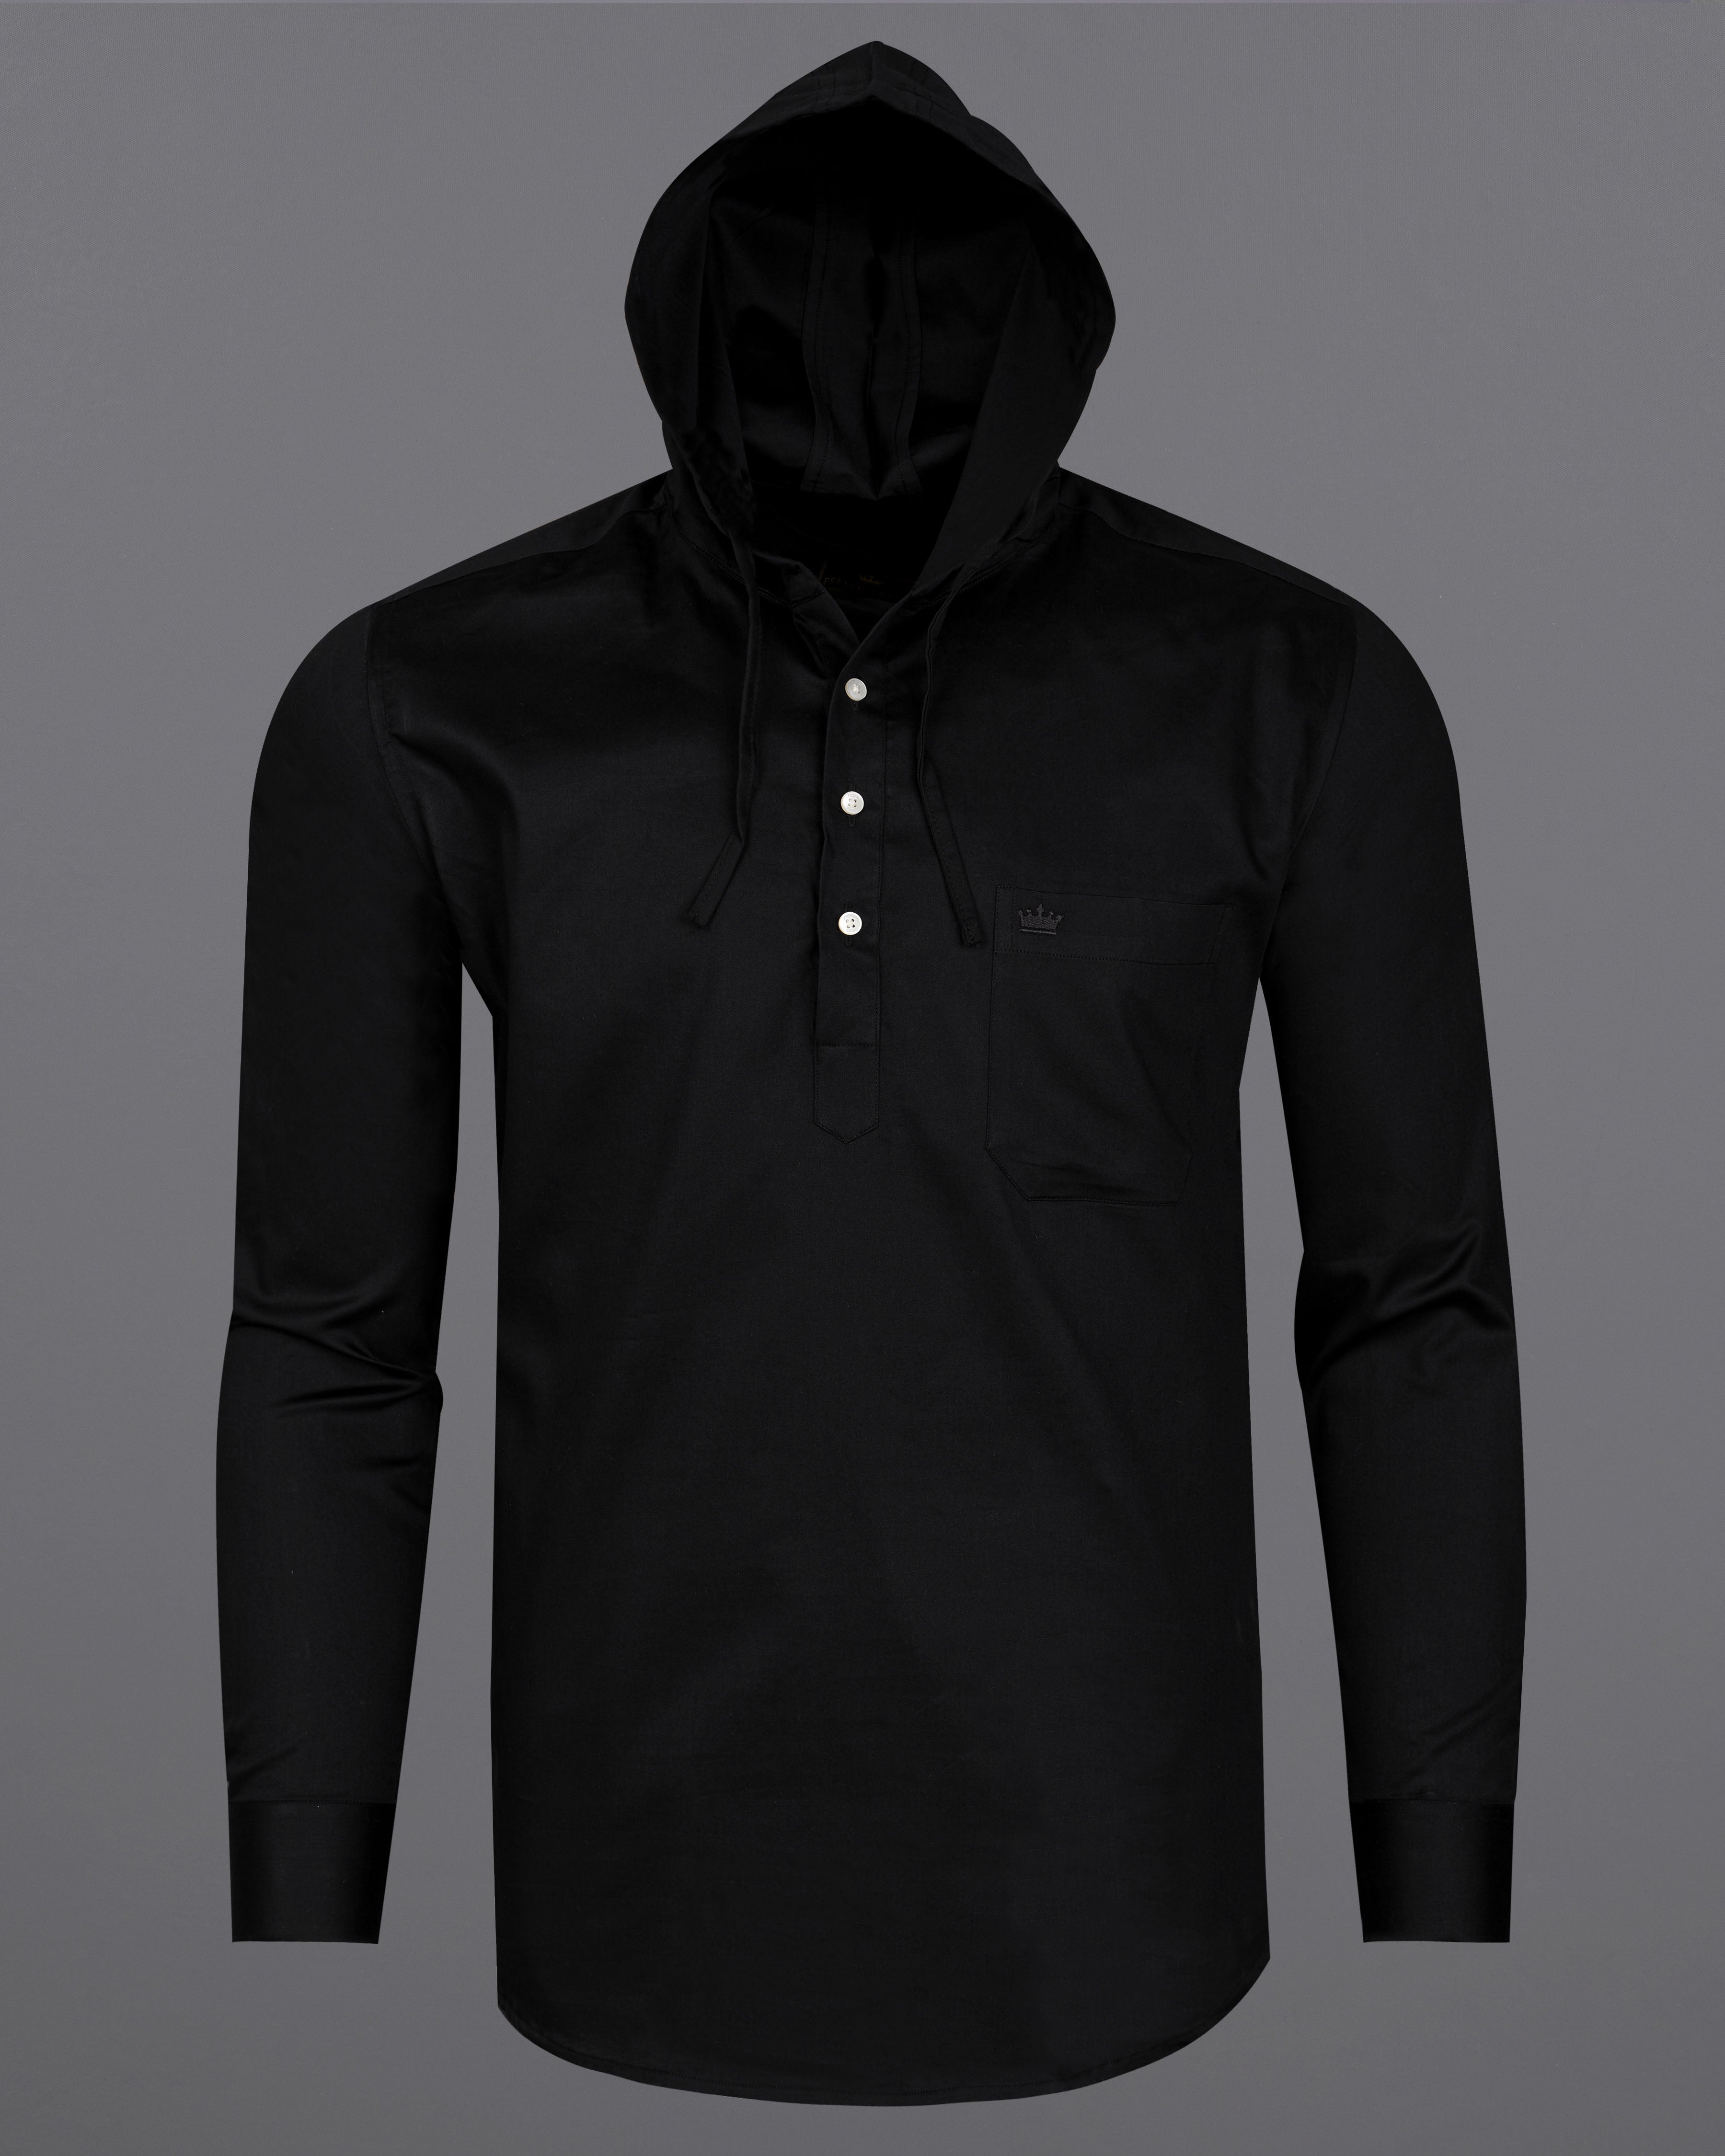 French Crown Jade Black Plain-Solid Premium Cotton Hoodie Shirt For Men., 40 / M / Full Sleeves